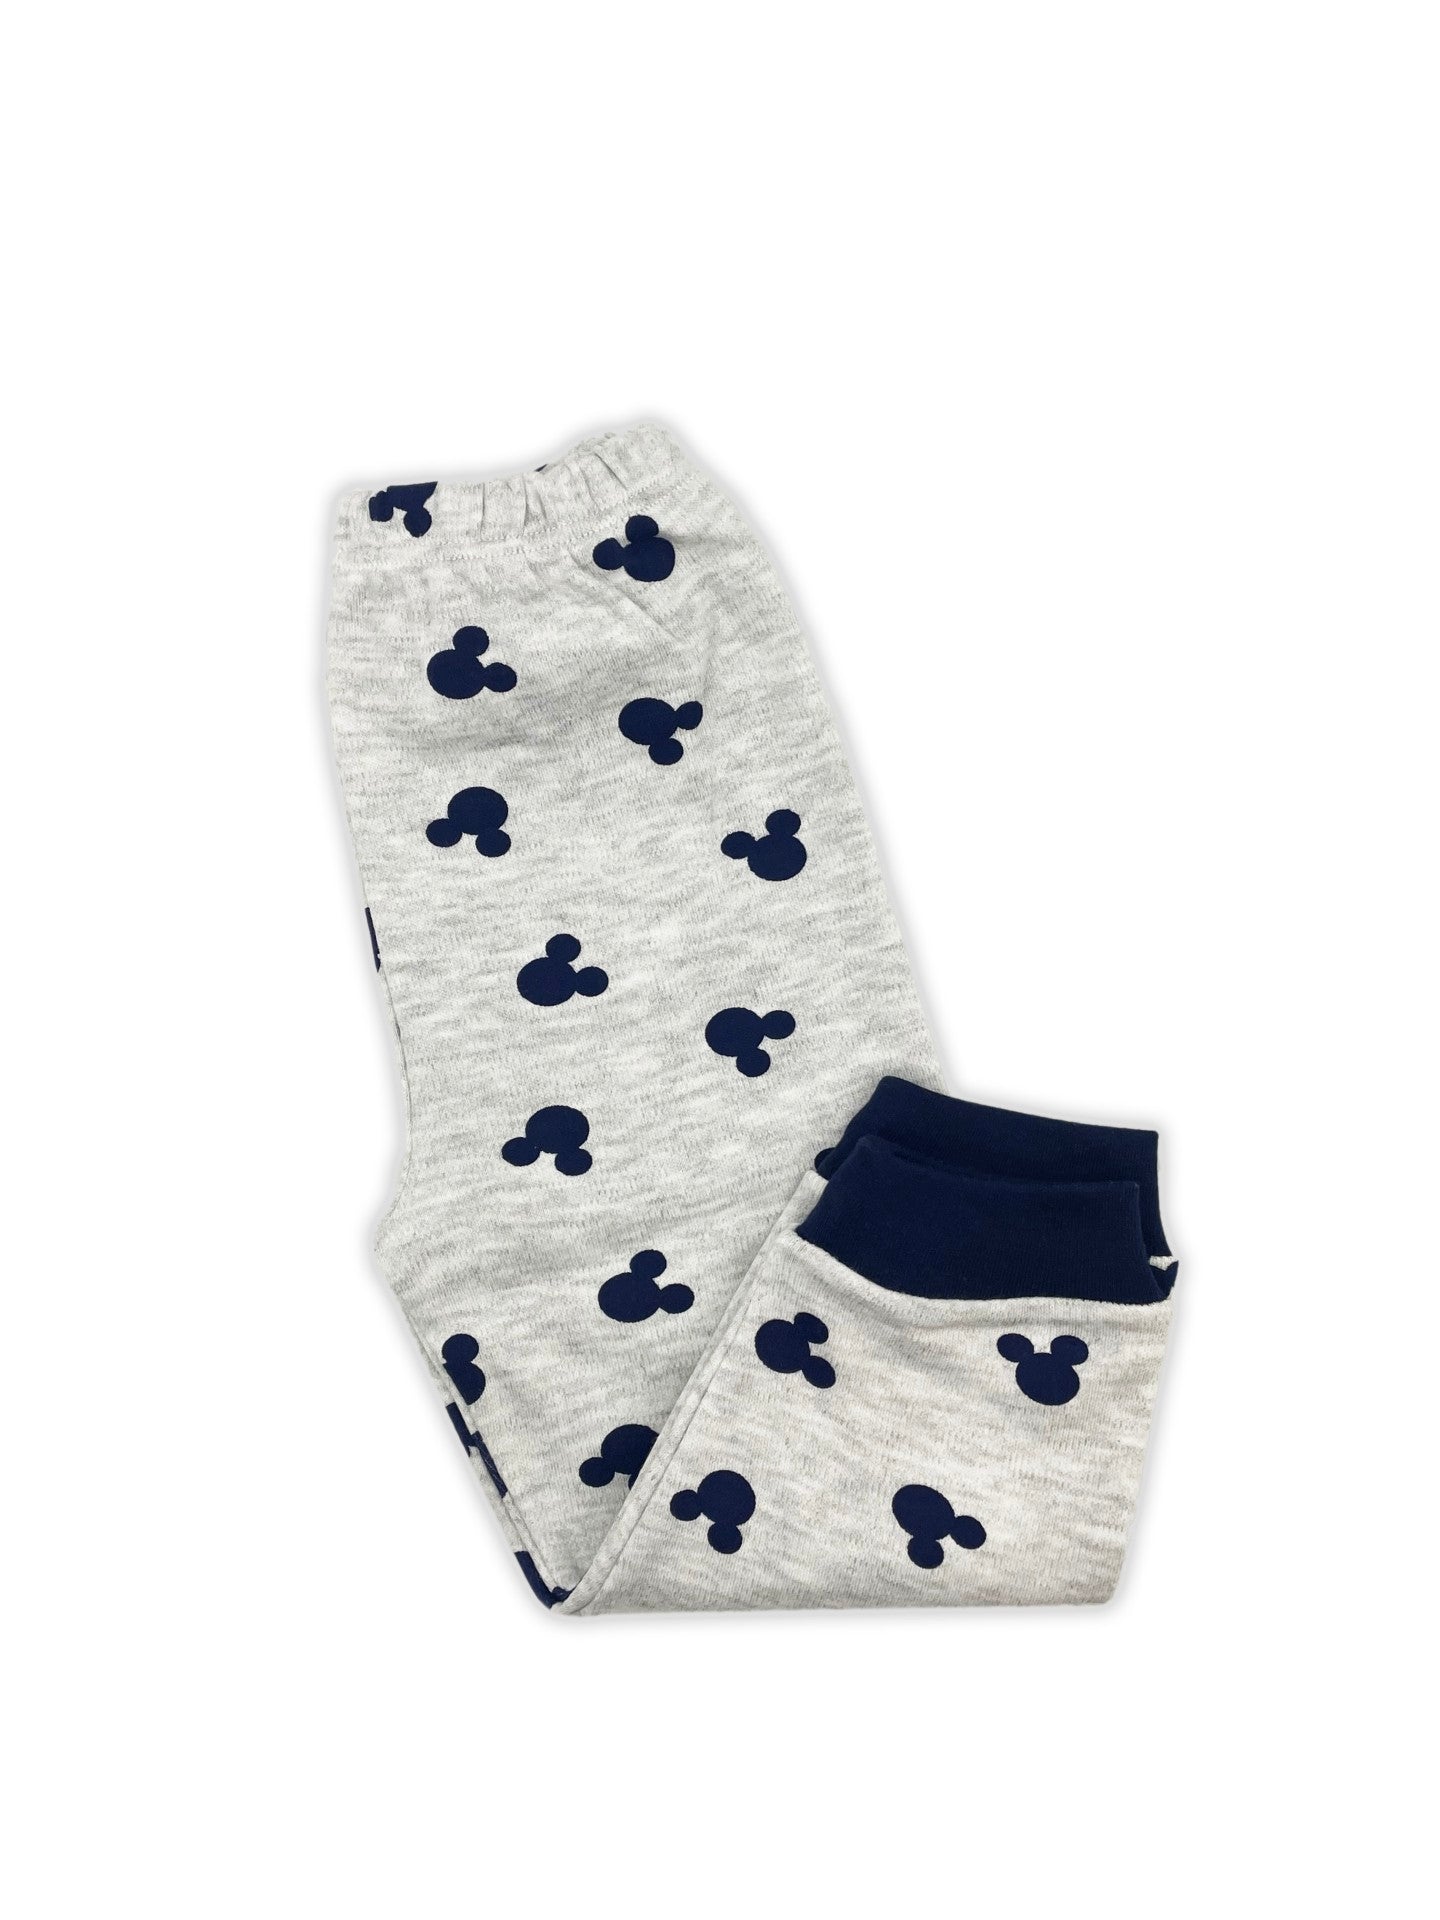 Sema Baby Mickey Mouse Bebek Pijama Takımı – Gri & Lacivert 0-3 Ay